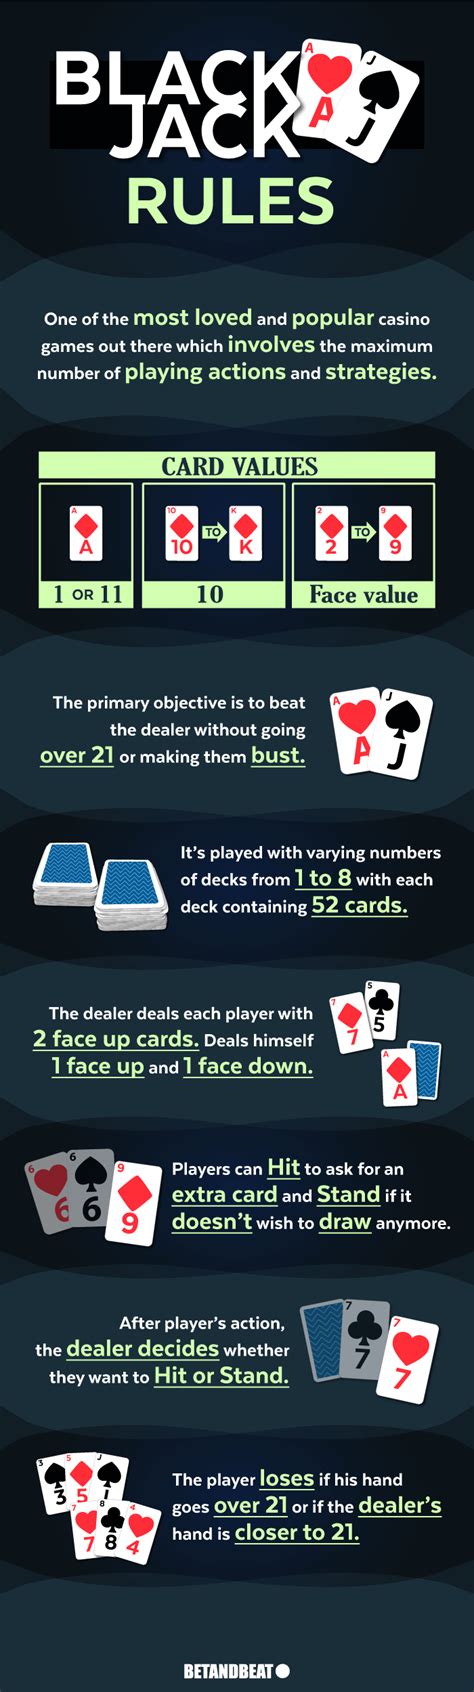 casino blackjack regeln